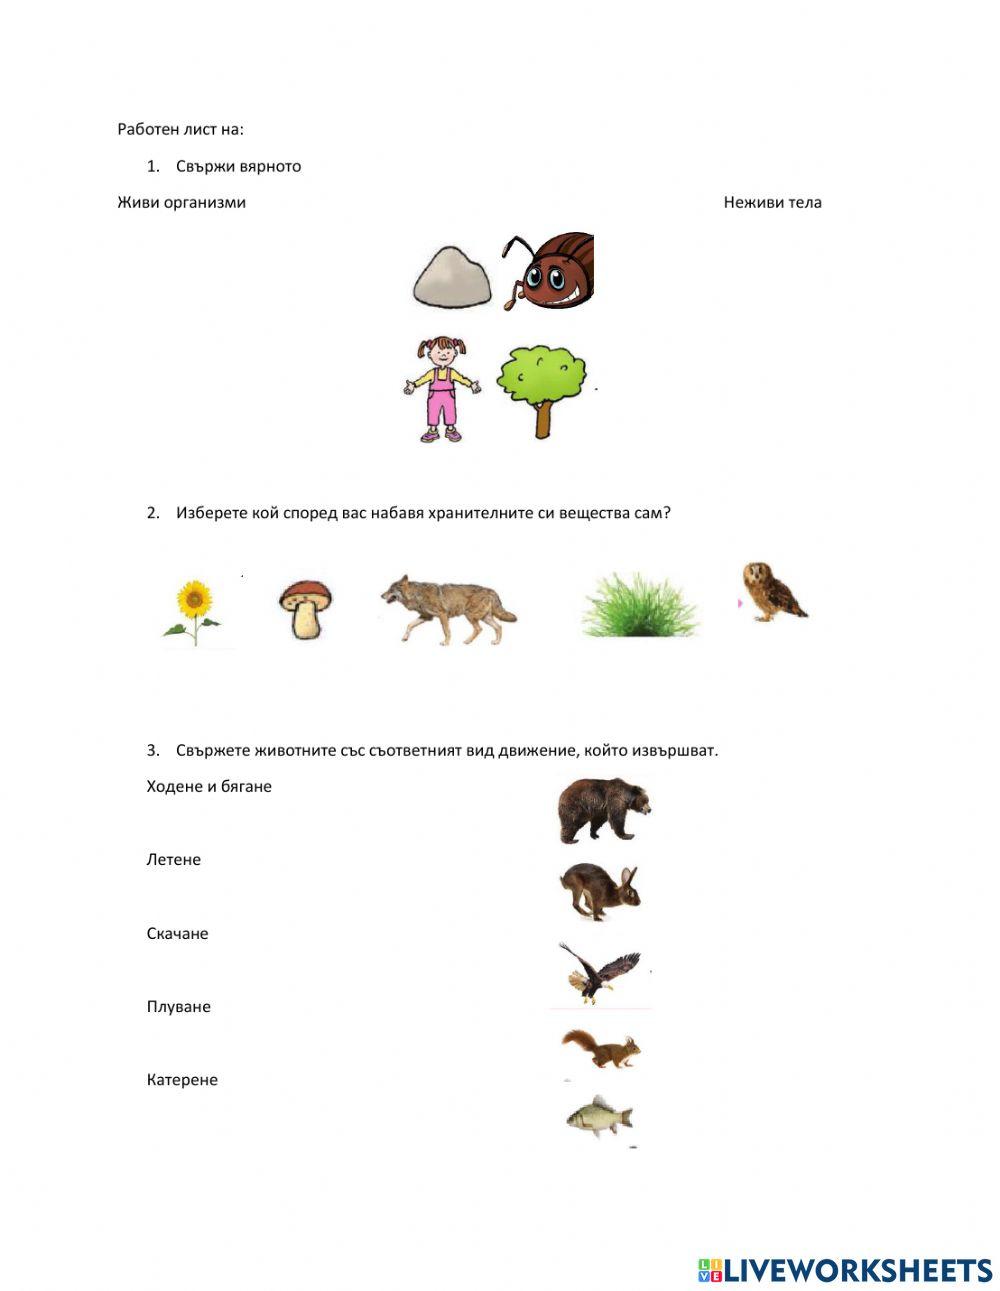 Разнообразие и групиране на организмите